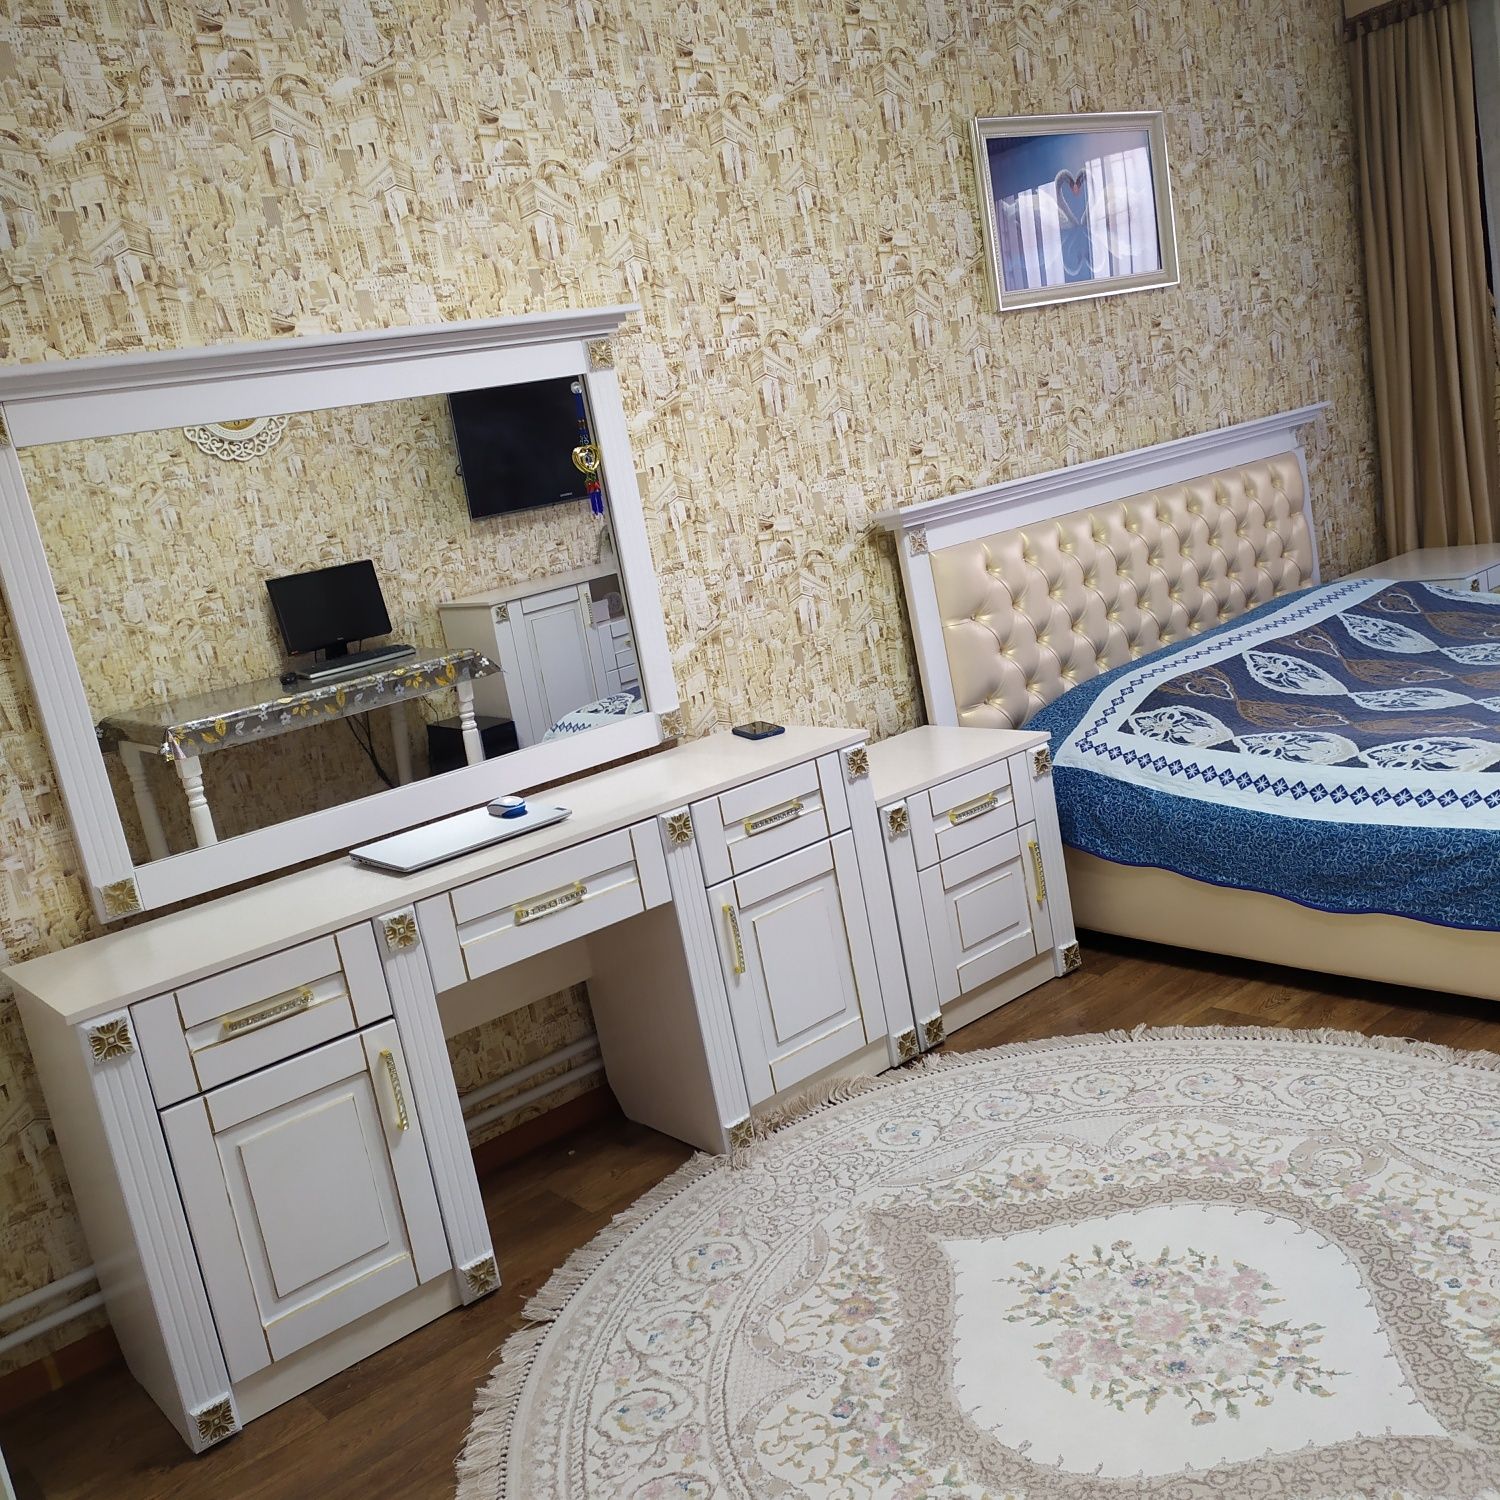 Продаётся 3-х комнатная квартира в п.Касыма-Кайсенова